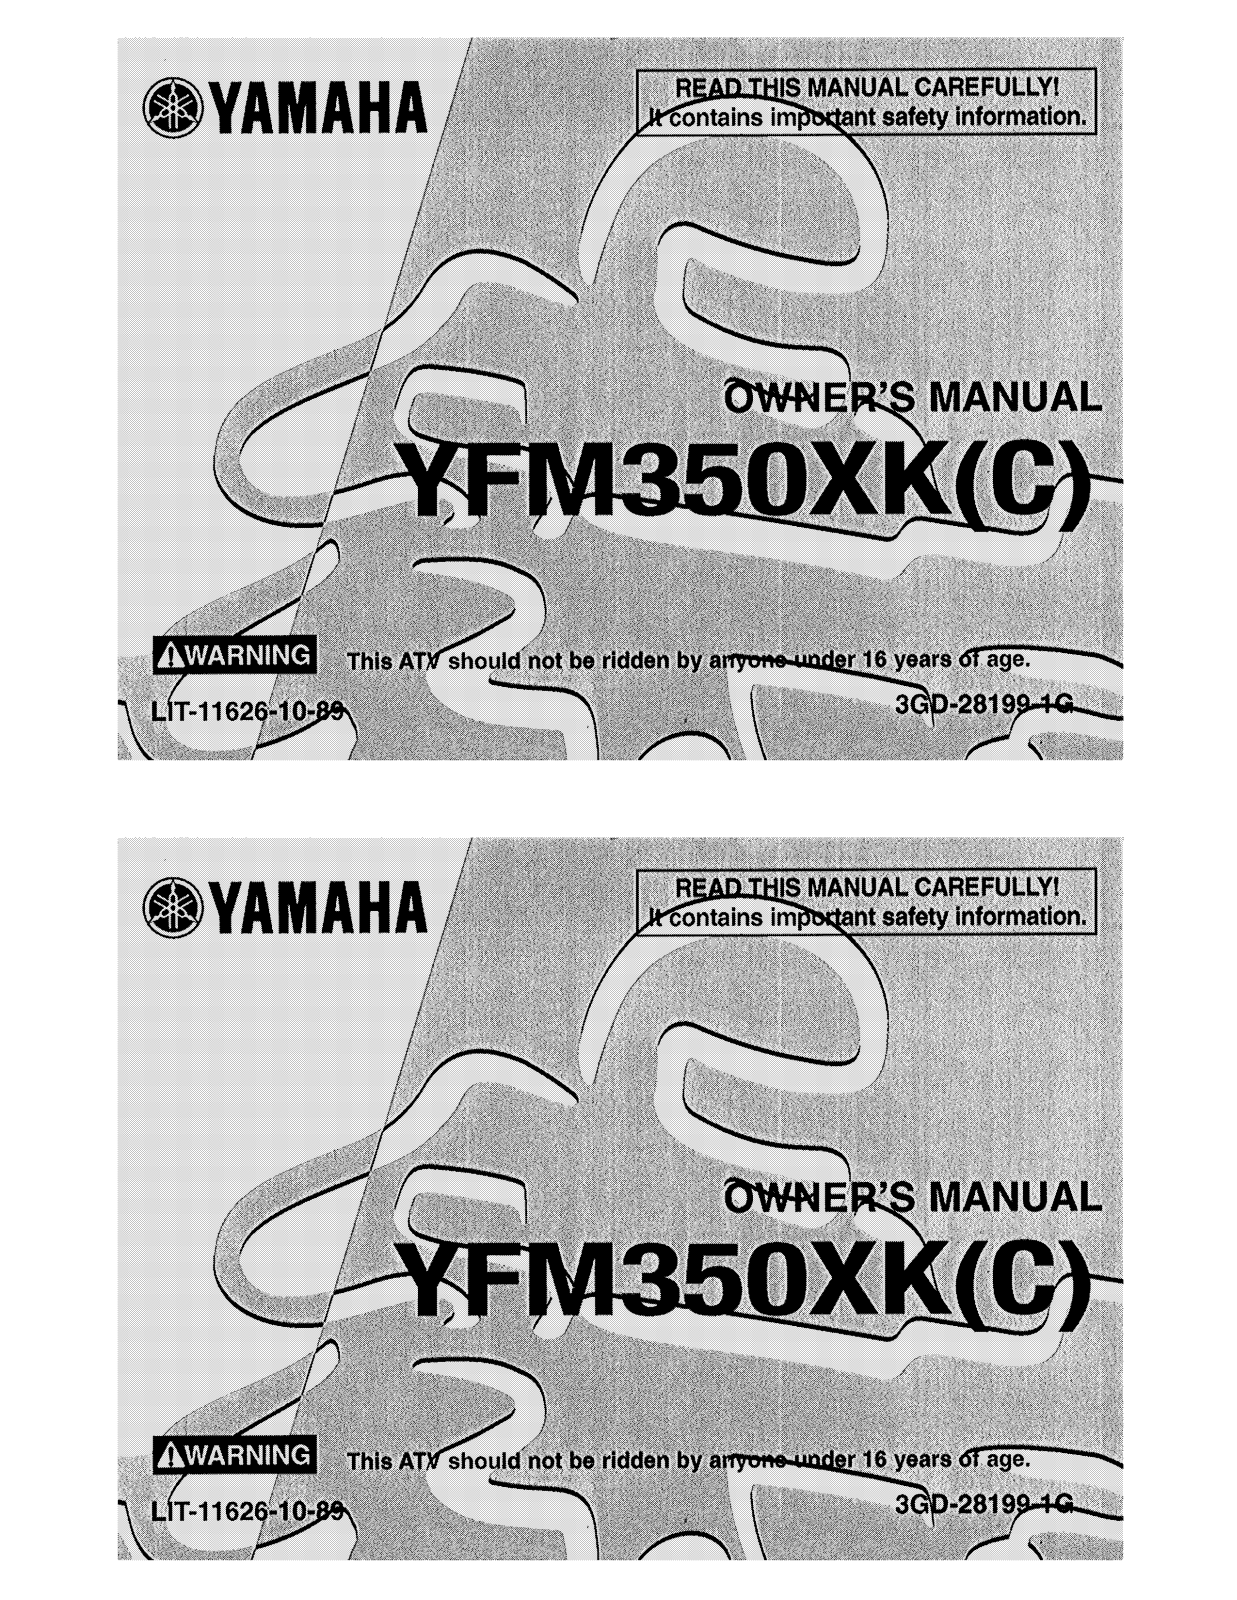 Yamaha YFM350XK(C) User Manual